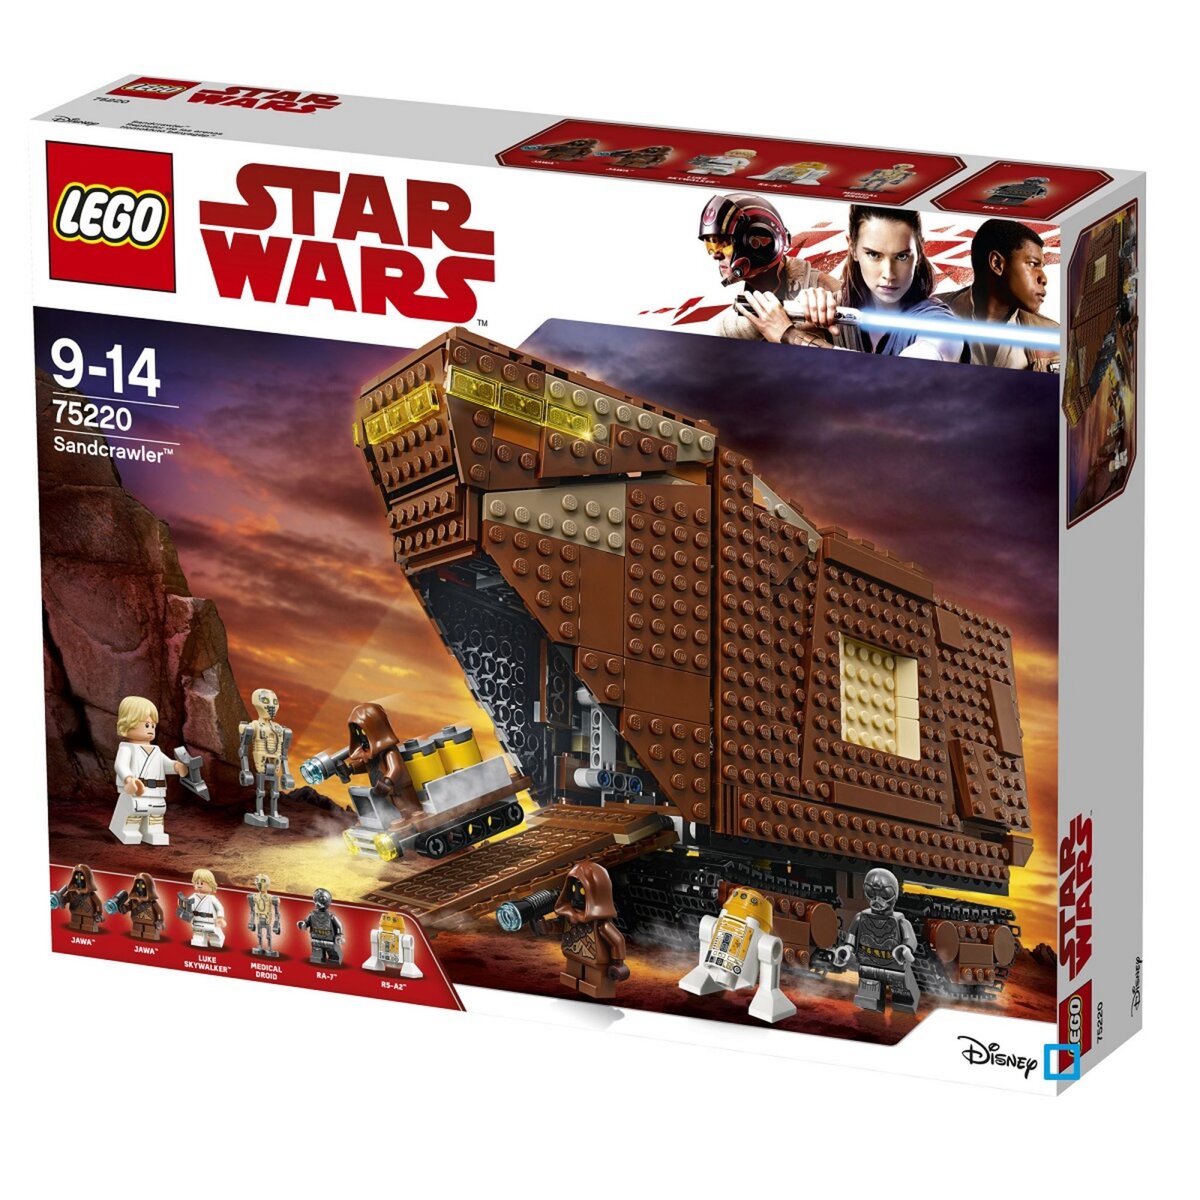 LEGO Star Wars 75220 - Sandcrawler 